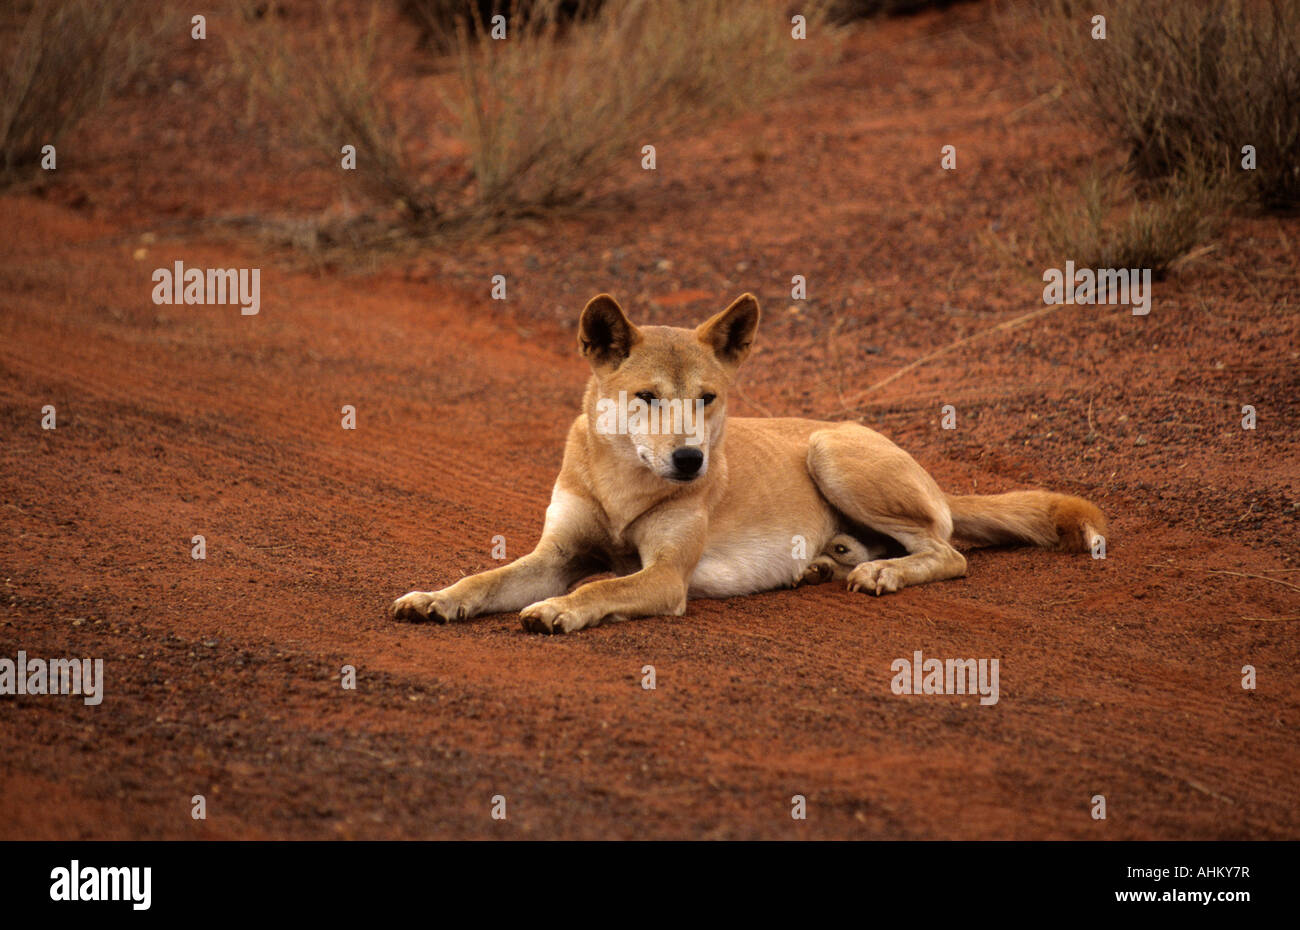 Dingo sitzend männlich Canis familiaris Nähe Ayers Rock dingo sitting male near Ayers Rock Australia Stock Photo